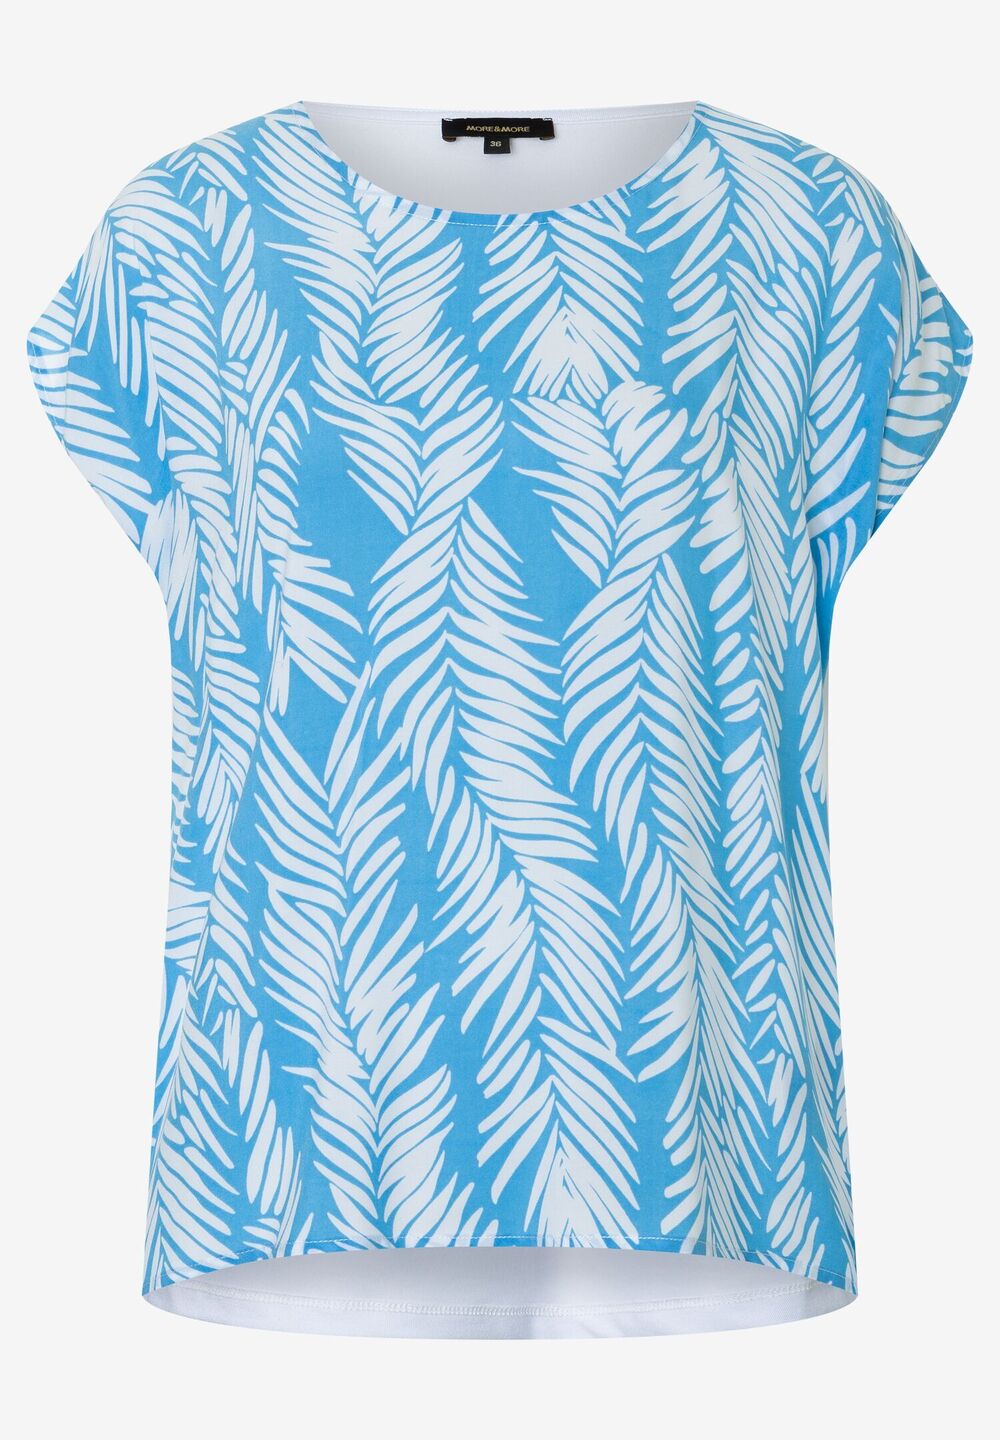 Blusenshirt, Palmblätter-Print, Sommer-Kollektion, blauFrontansicht